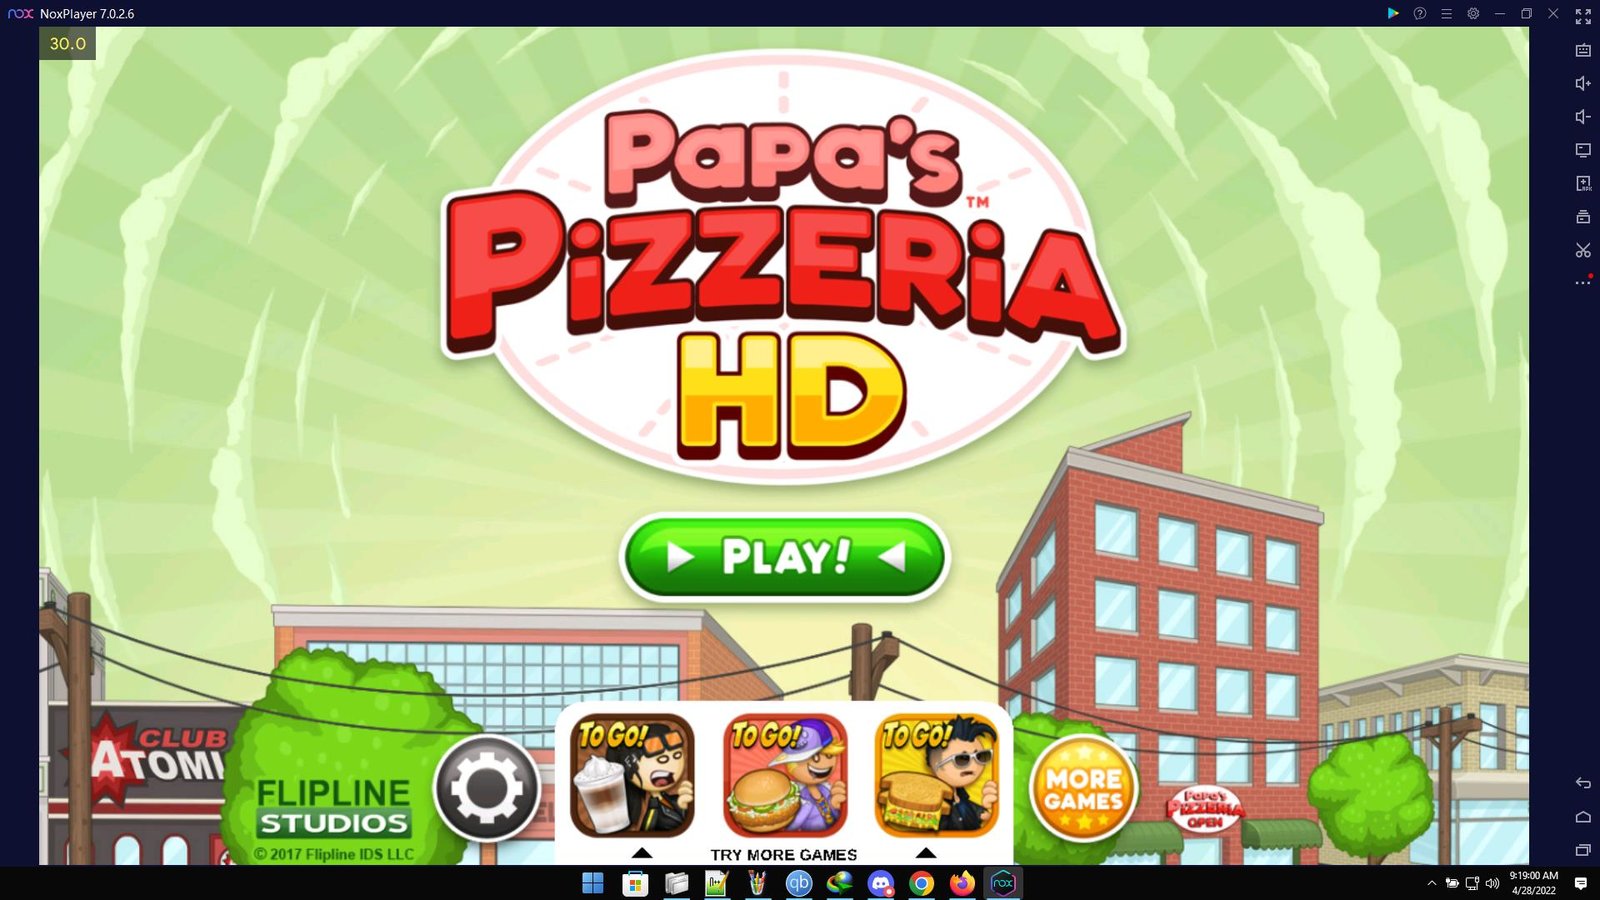 Papa's Pizzeria HD Mod apk [Unlimited money] download - Papa's Pizzeria HD  MOD apk 1.1.1 free for Android.